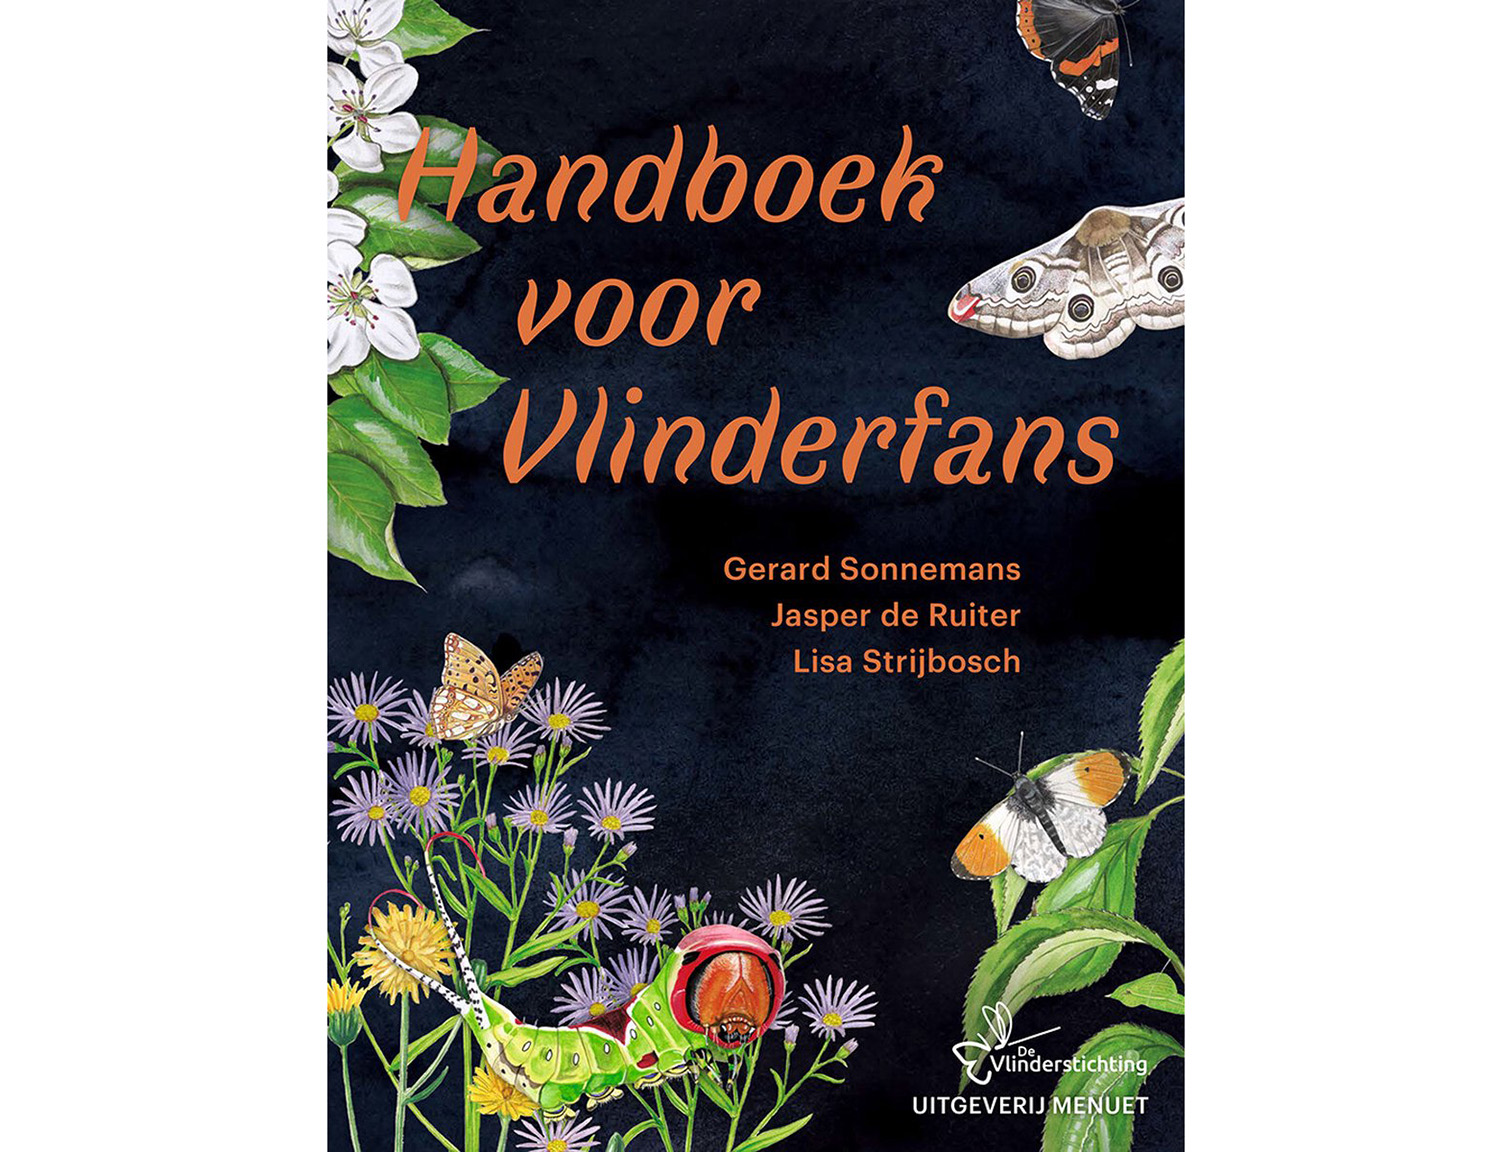 handboek vlinder fans